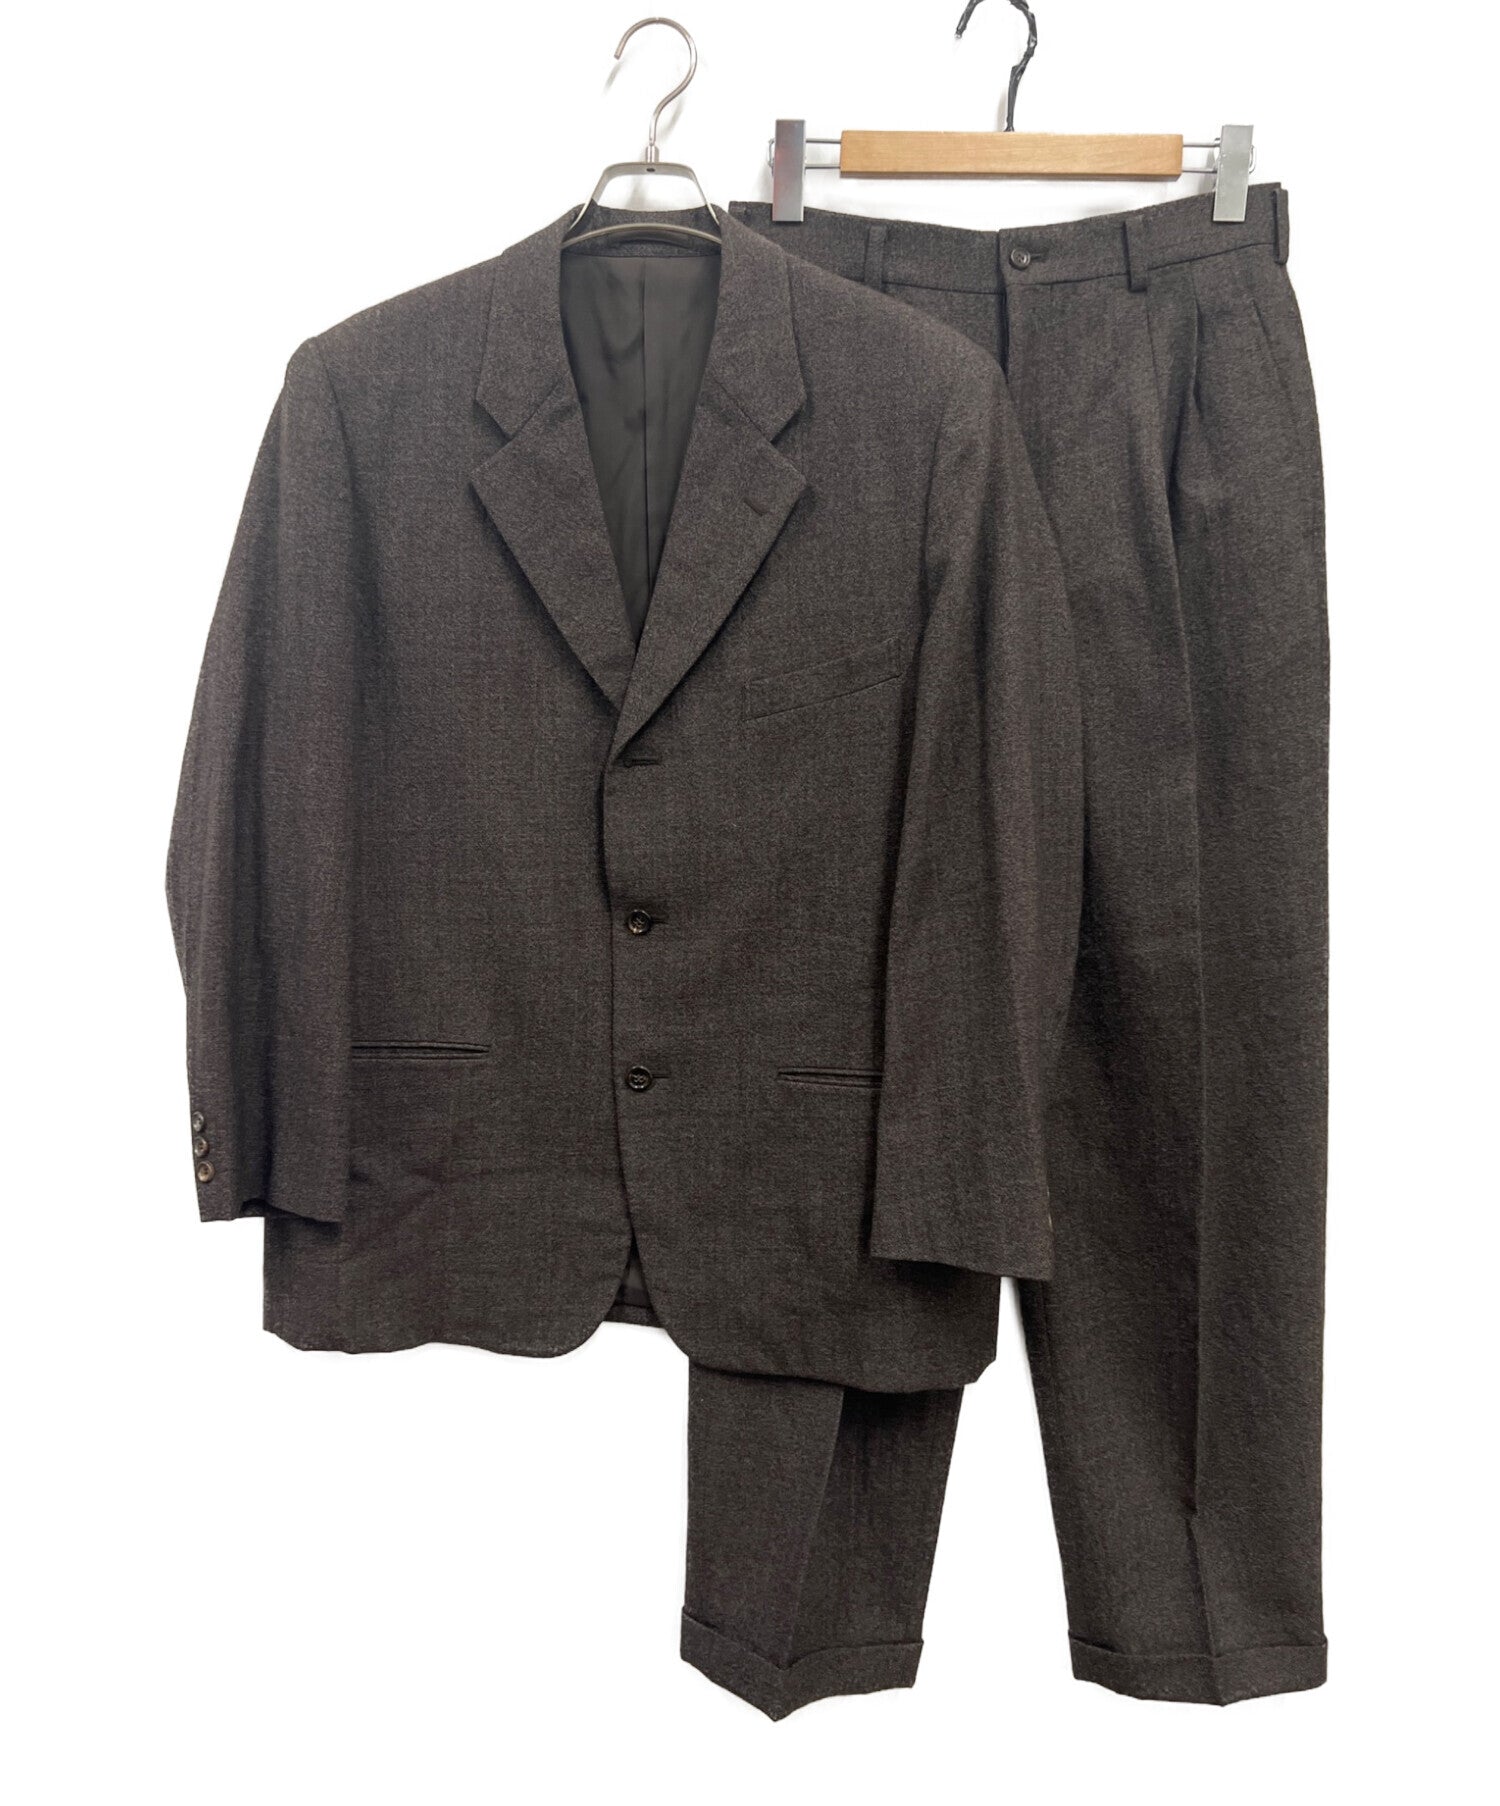 COMME des GARCONS HOMME PLUS suit that can be worn as a set-up D-TK921